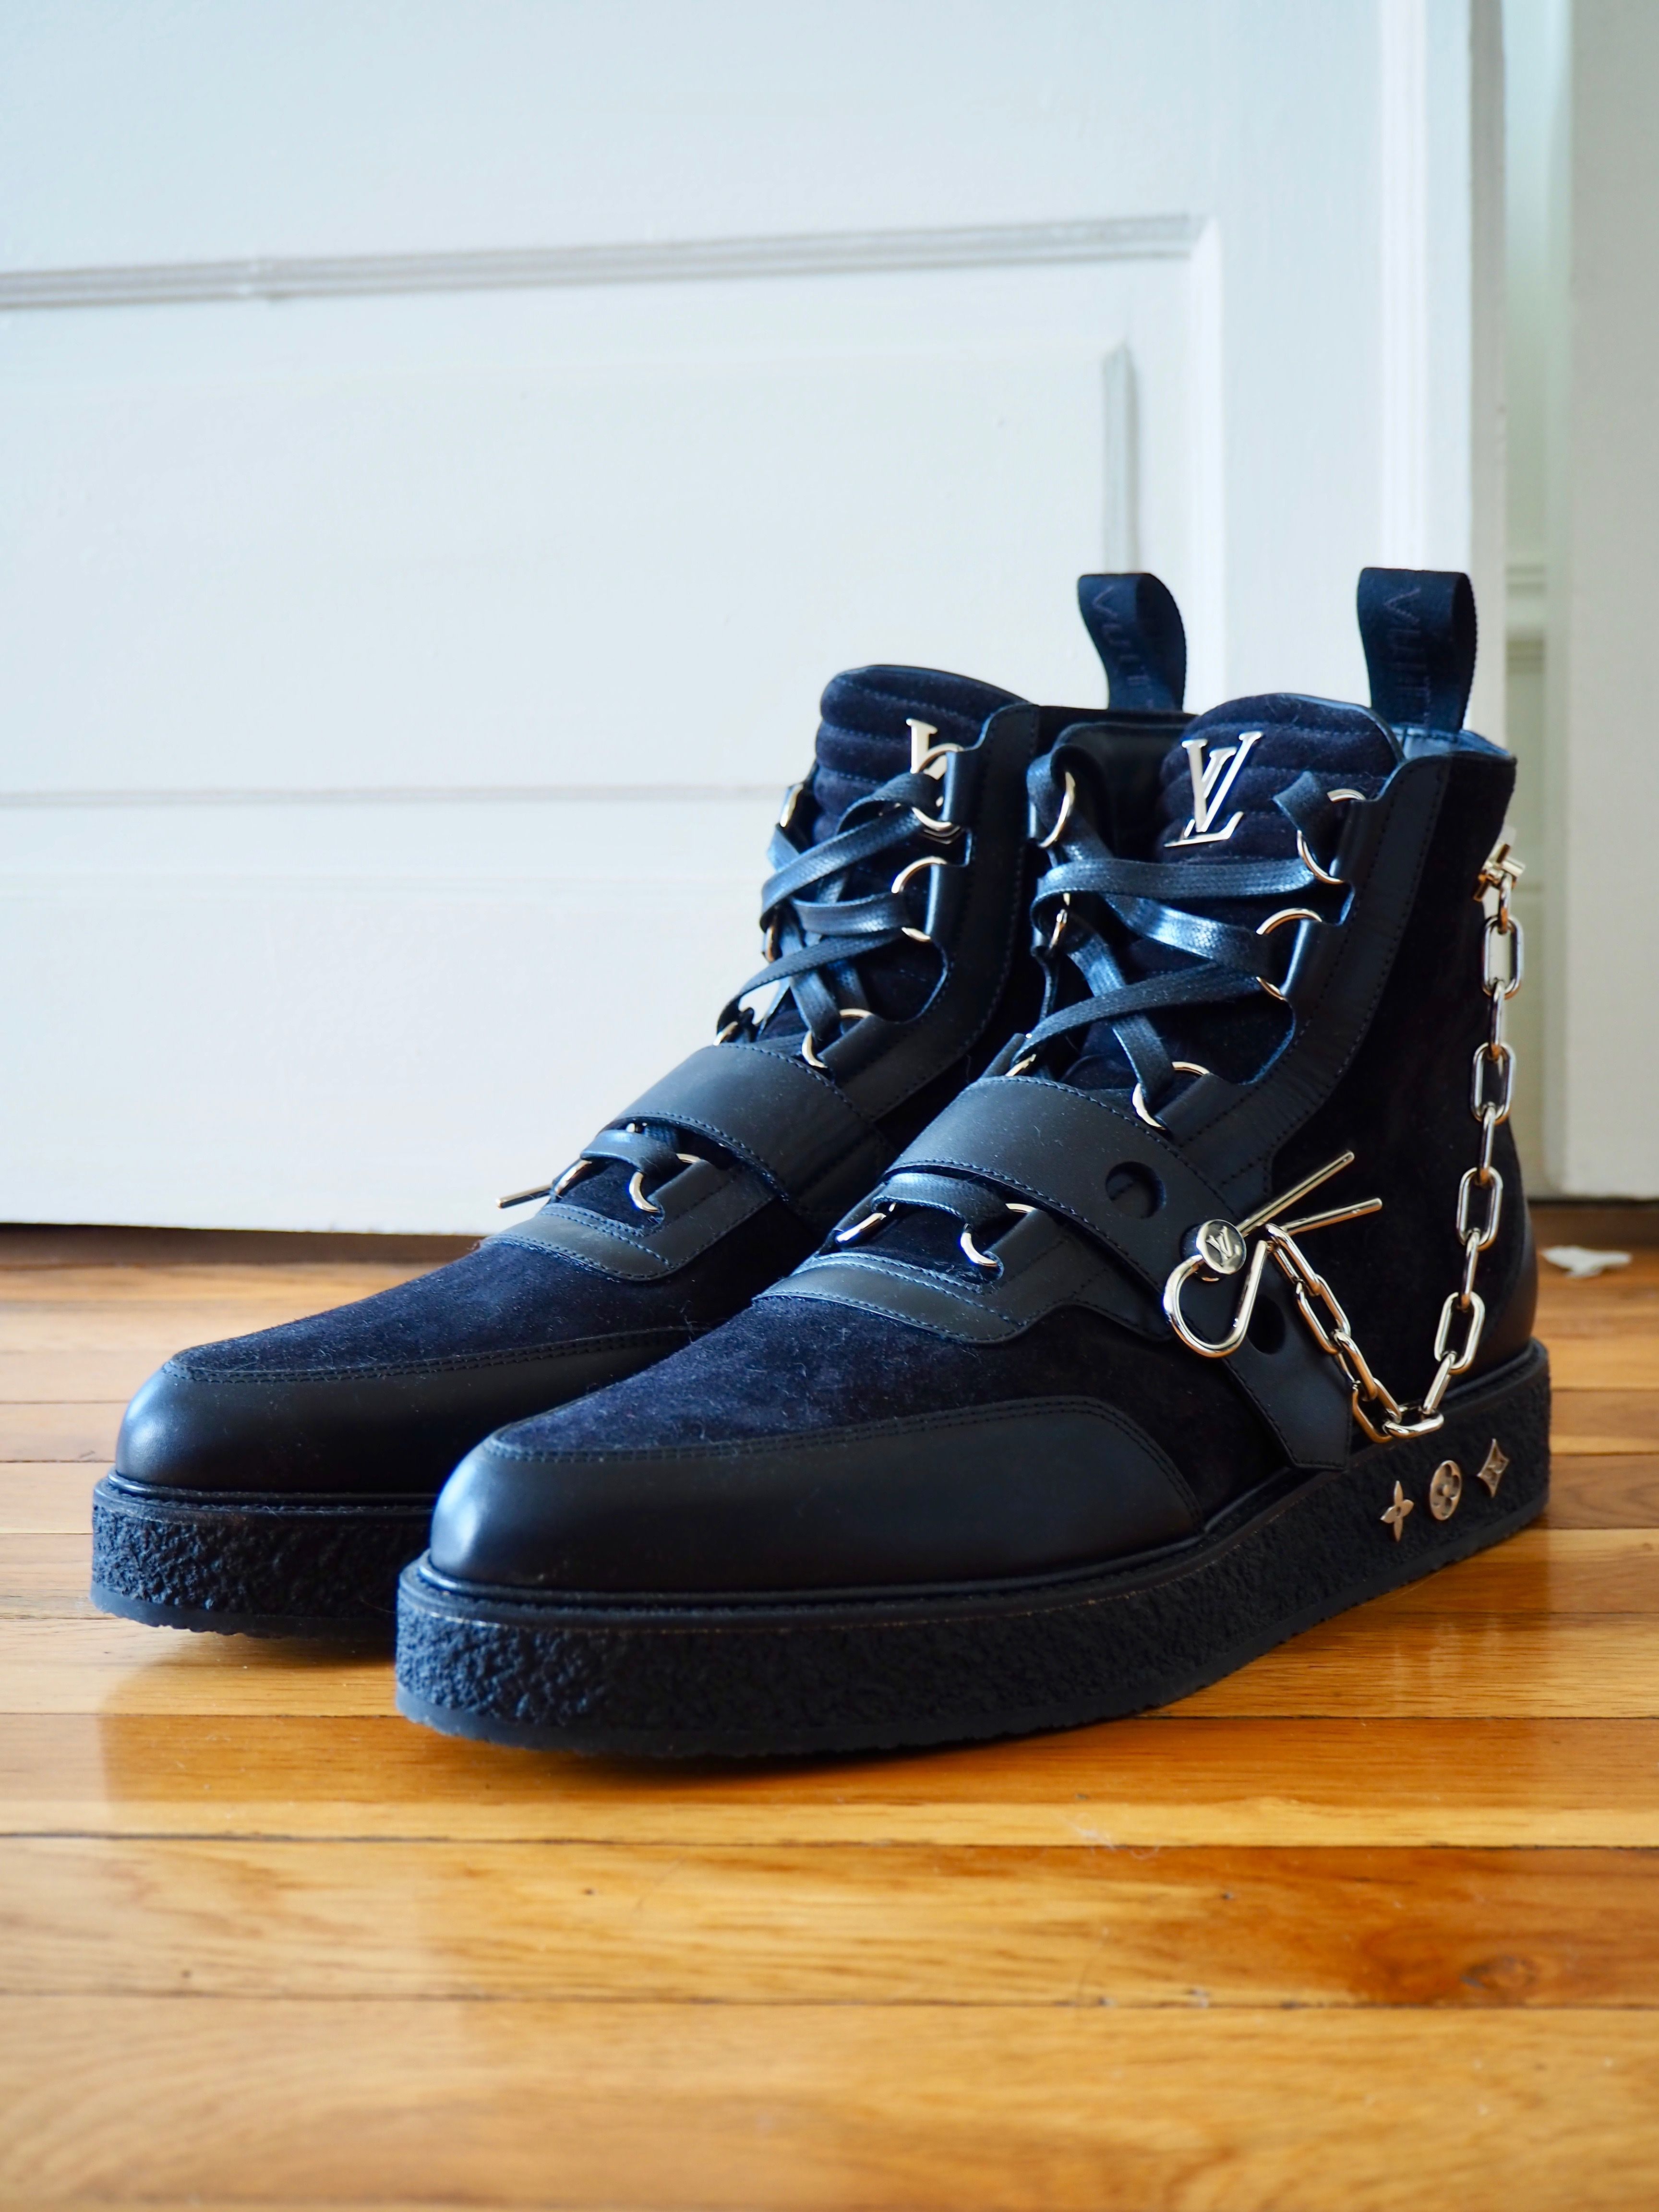 Louis Vuitton Men's Beige Suede LV Creeper Ankle Boot